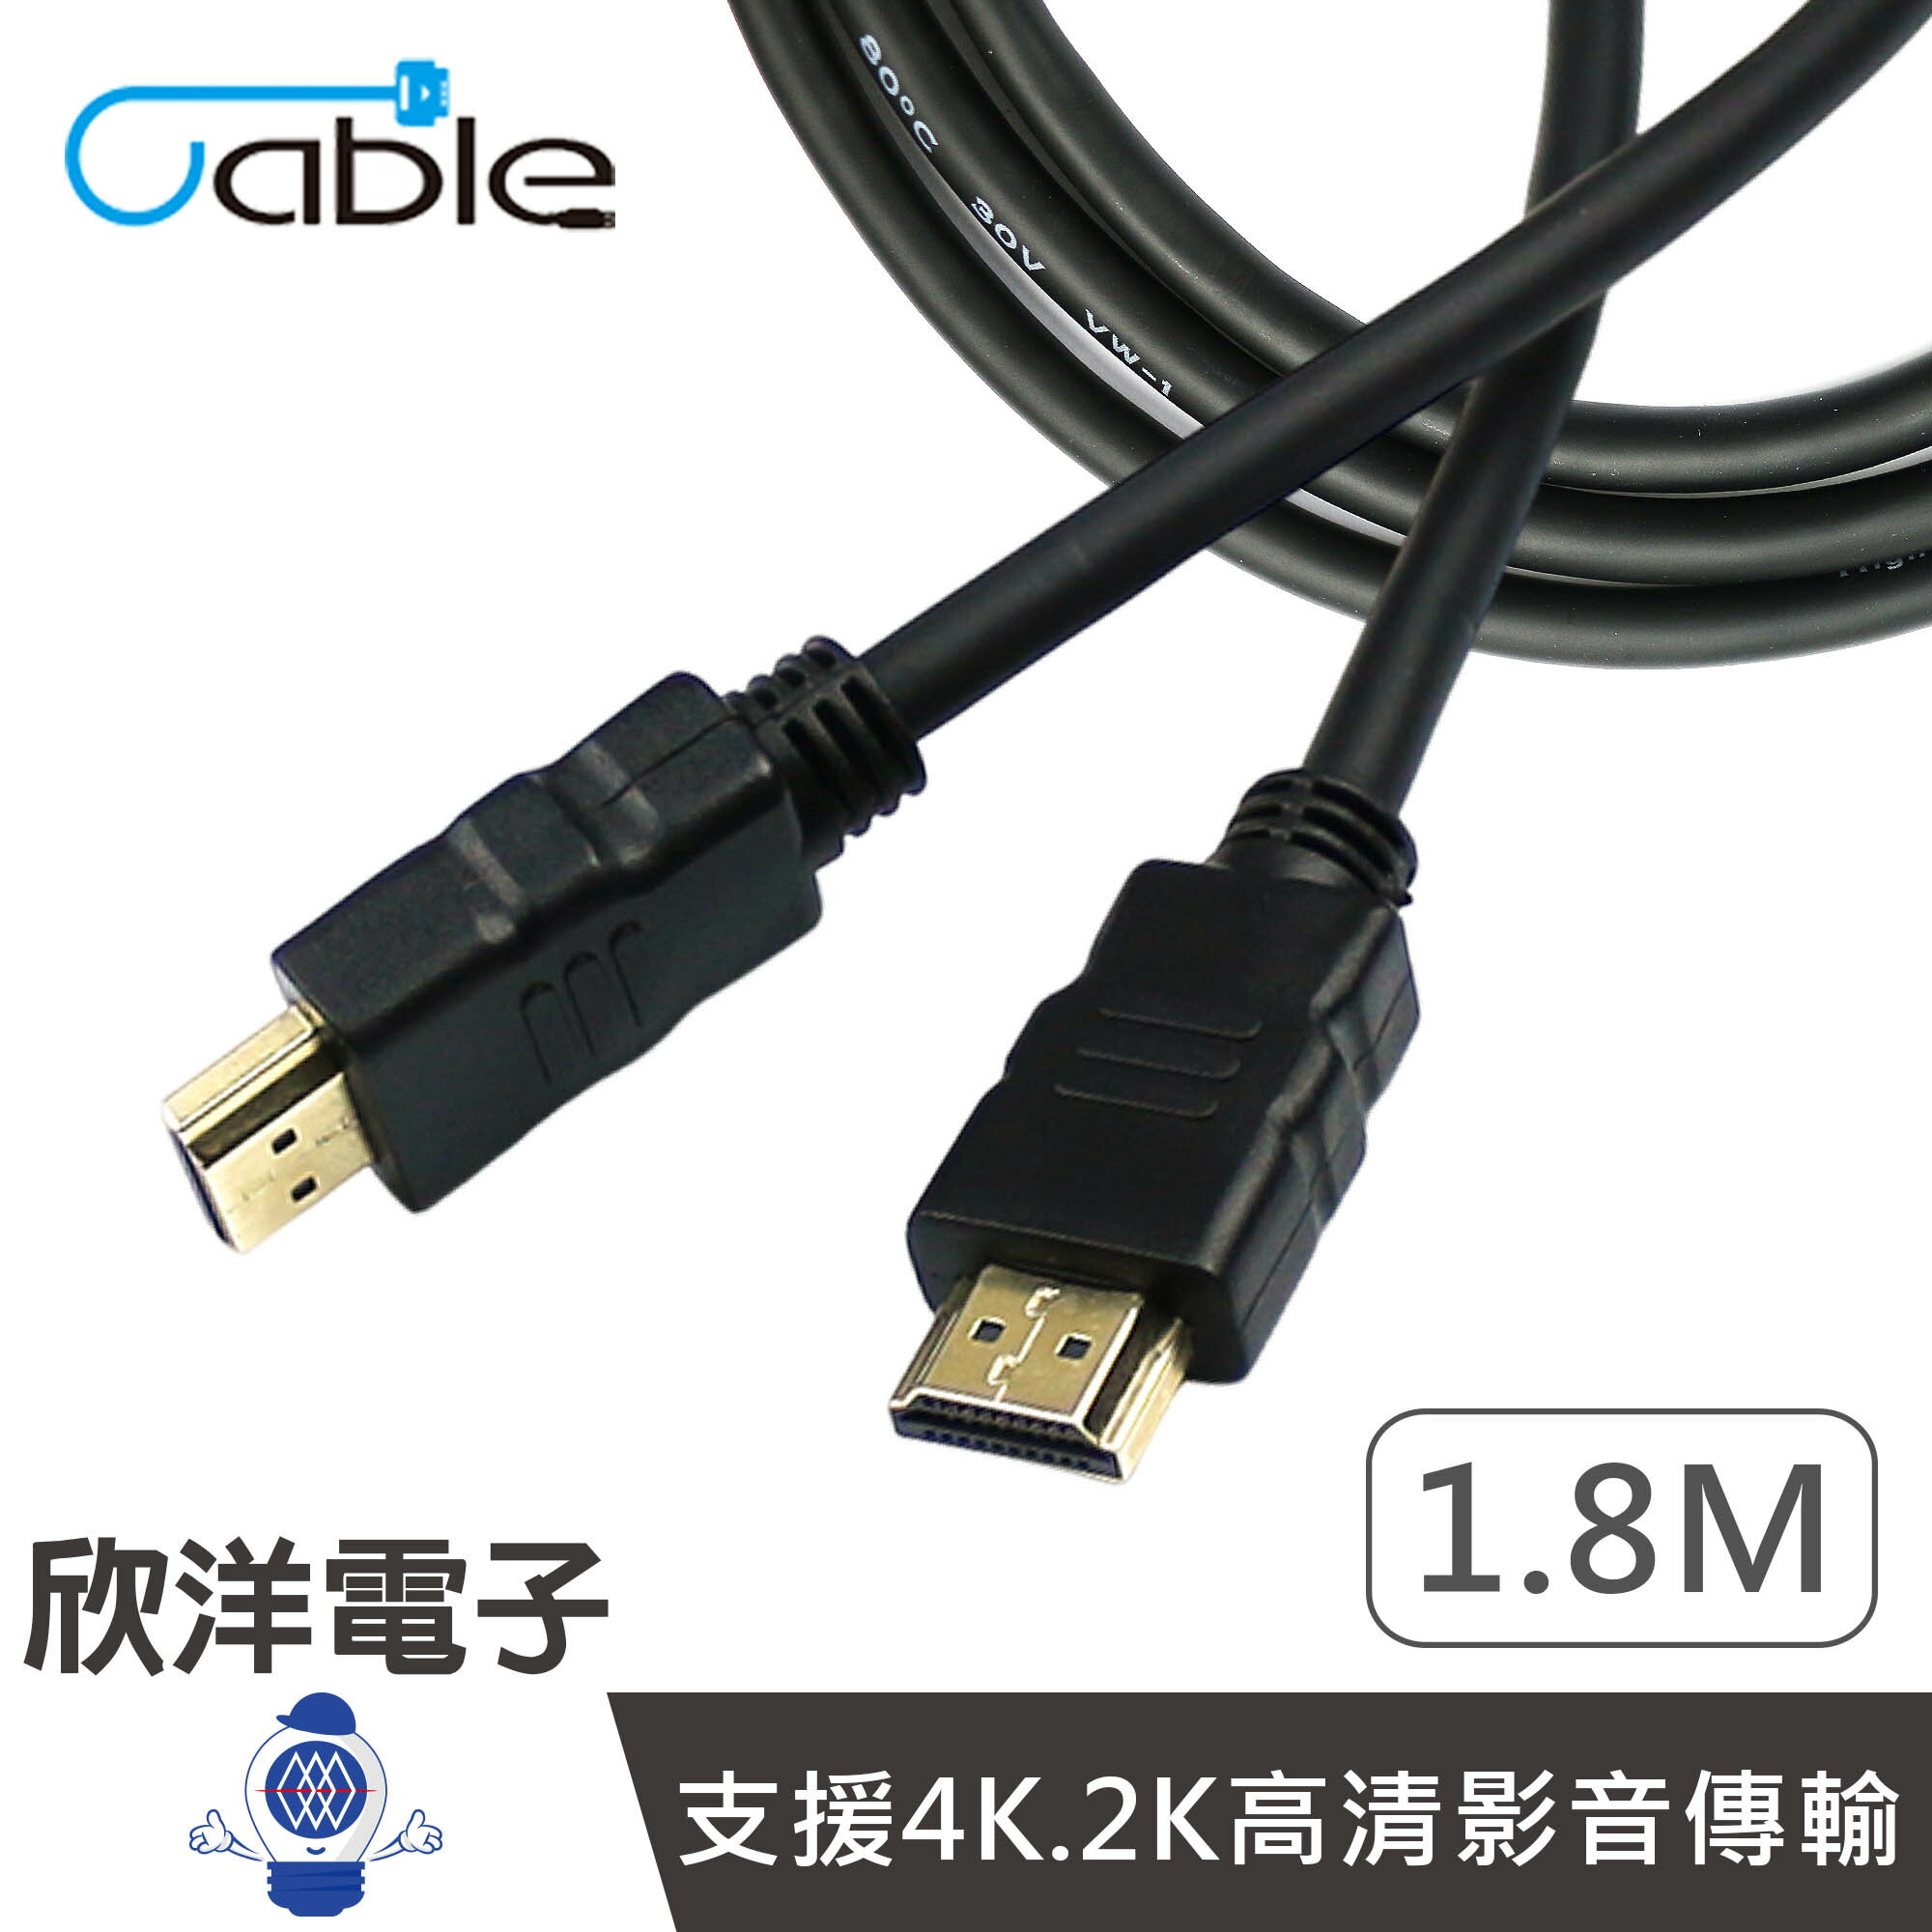 ※ 欣洋電子 ※ Cable HDMI 4K影音傳輸線 1.8M (UDHDMI1.8)